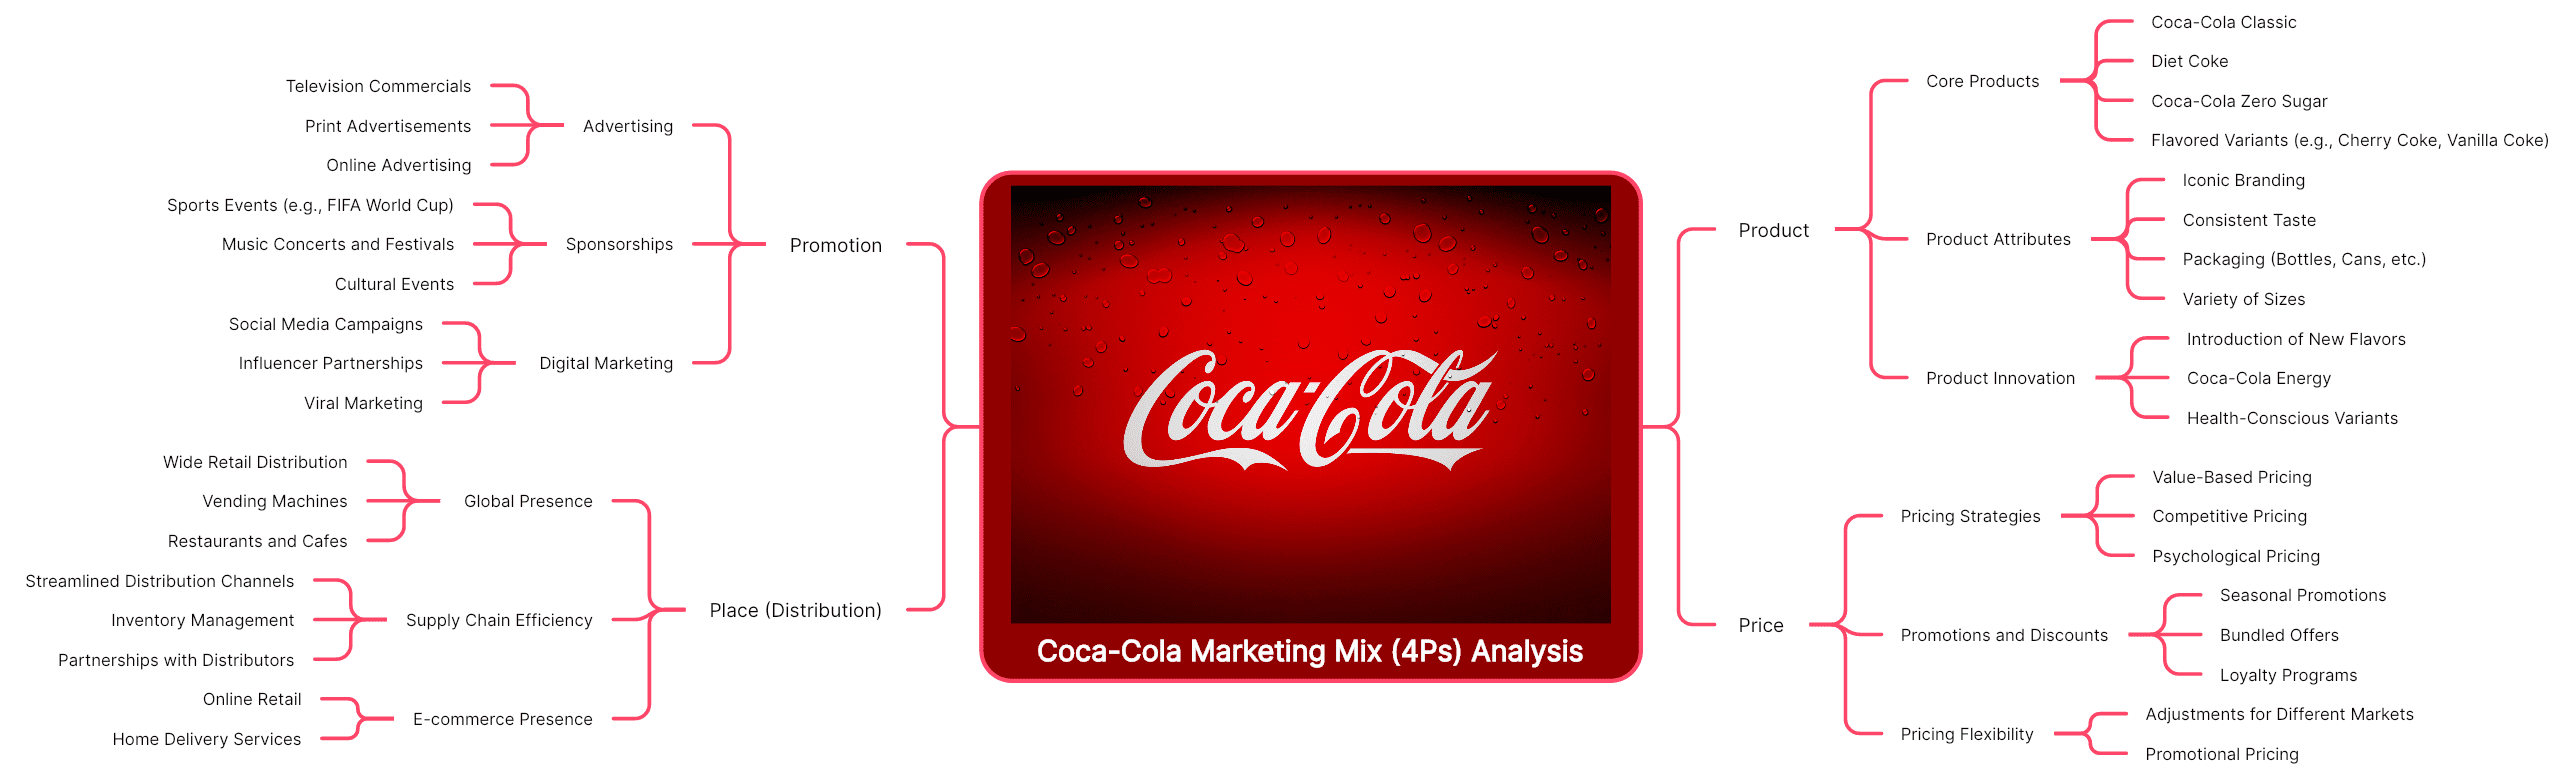 Coca-Cola Marketing Mix (4Ps) Analysis Mind Map